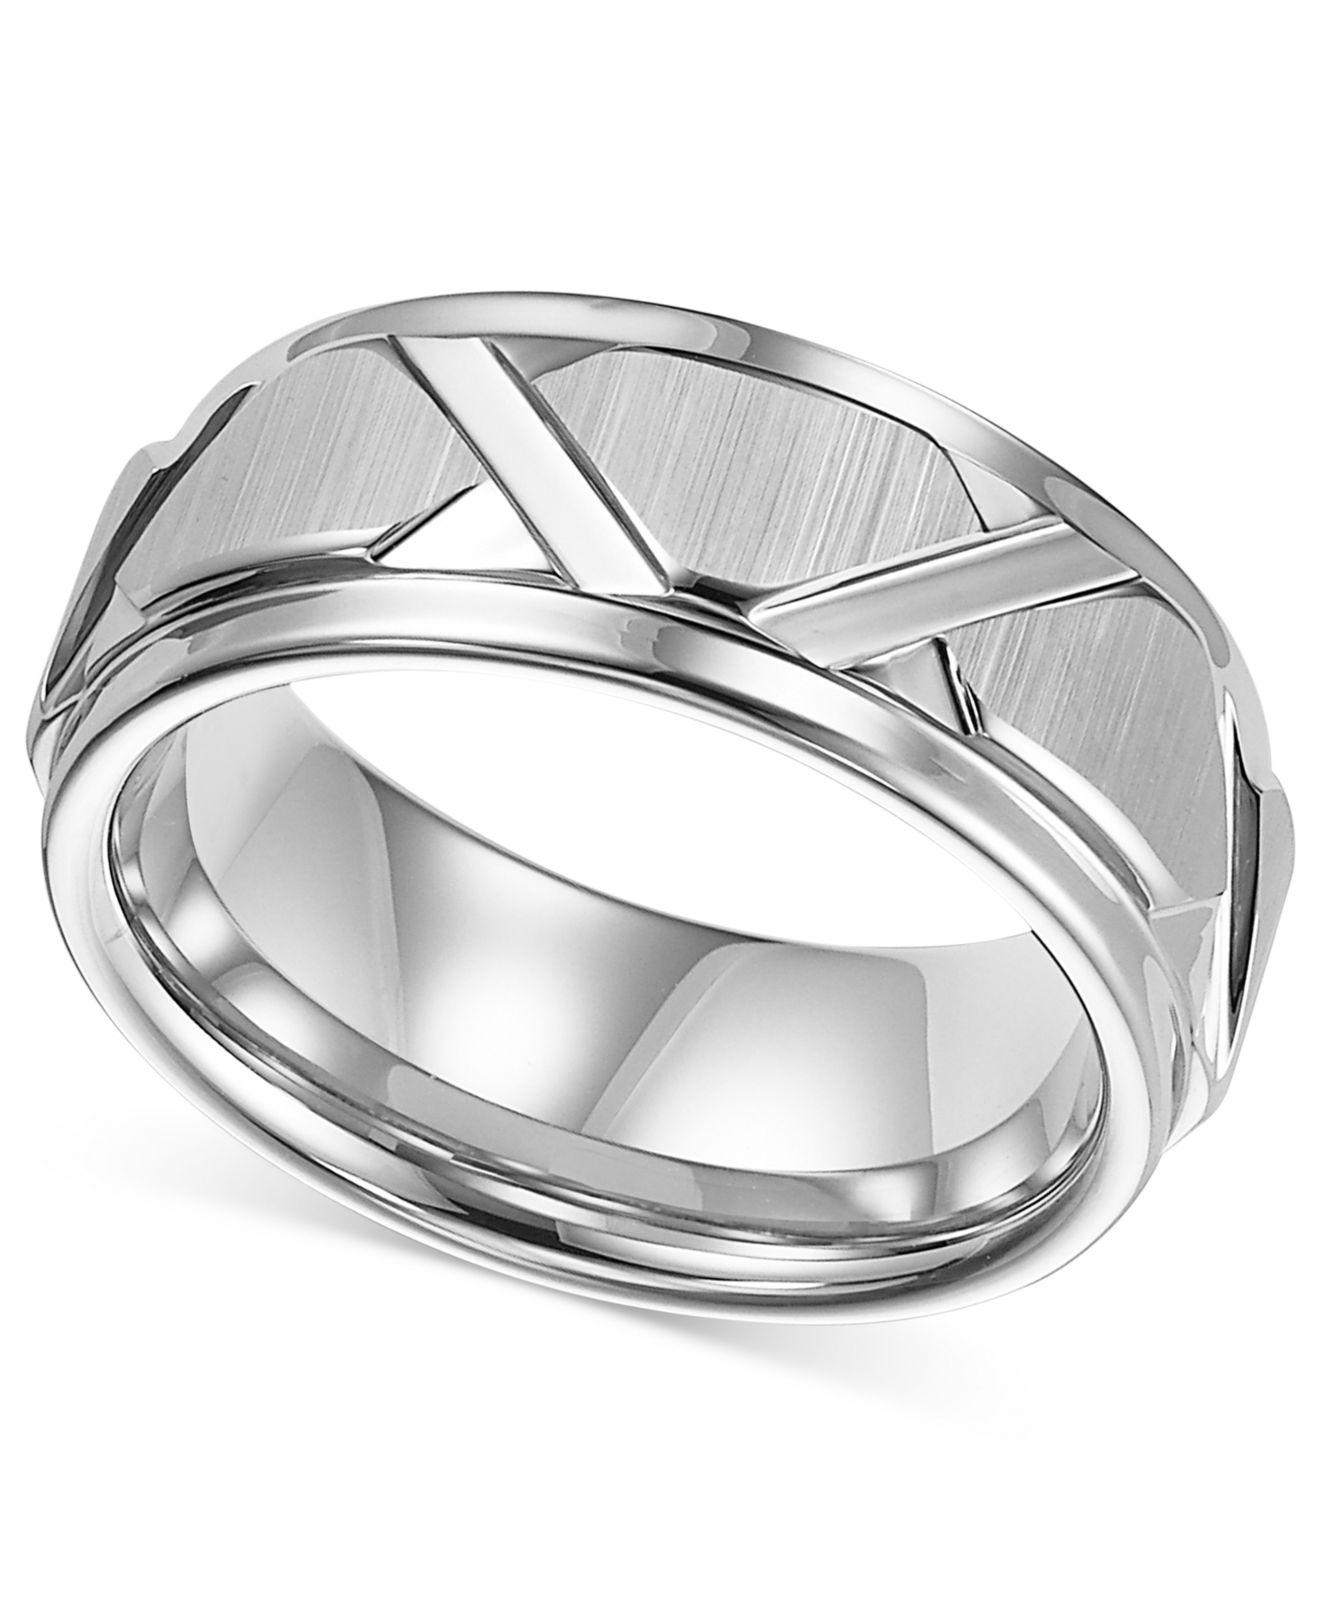 Lyst Triton Men's White Tungsten Ring, Bright Cuts Wedding Band in